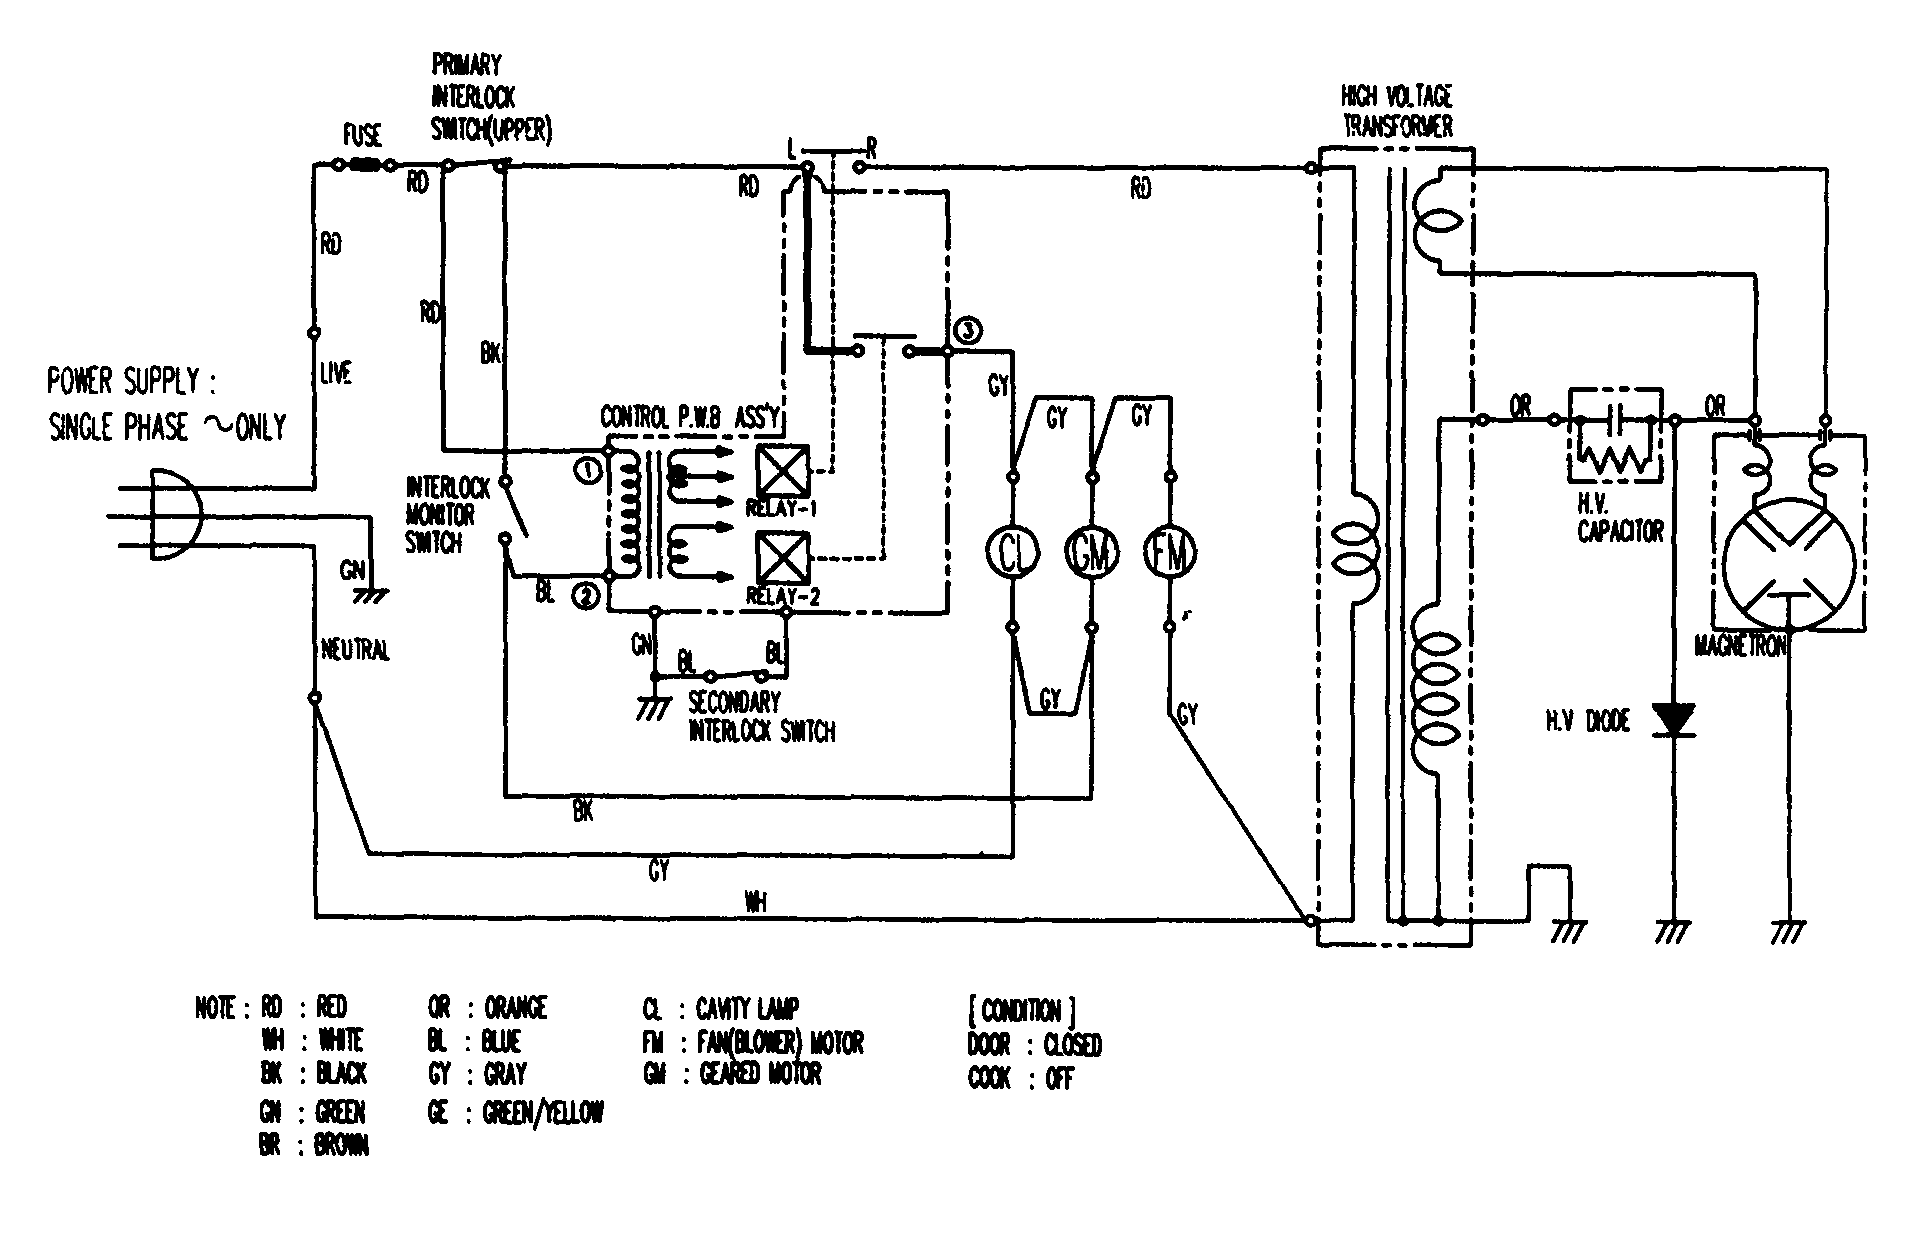 Emerson model MW8985W countertop microwave genuine parts makita blower wiring diagram 